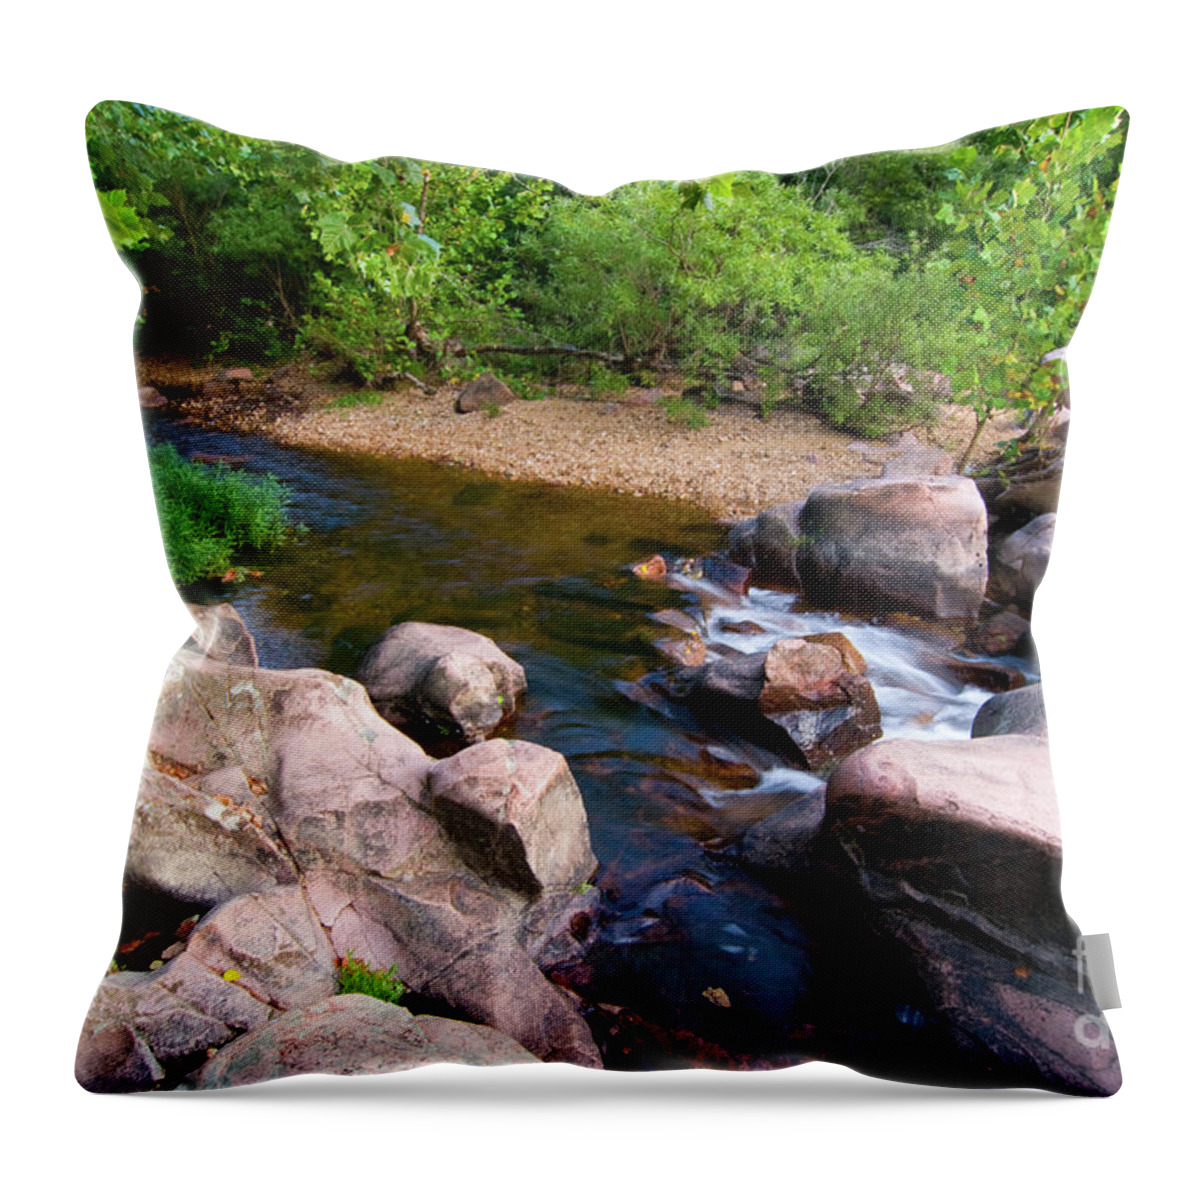 Castor River Throw Pillow featuring the photograph Castor River by Steve Stuller